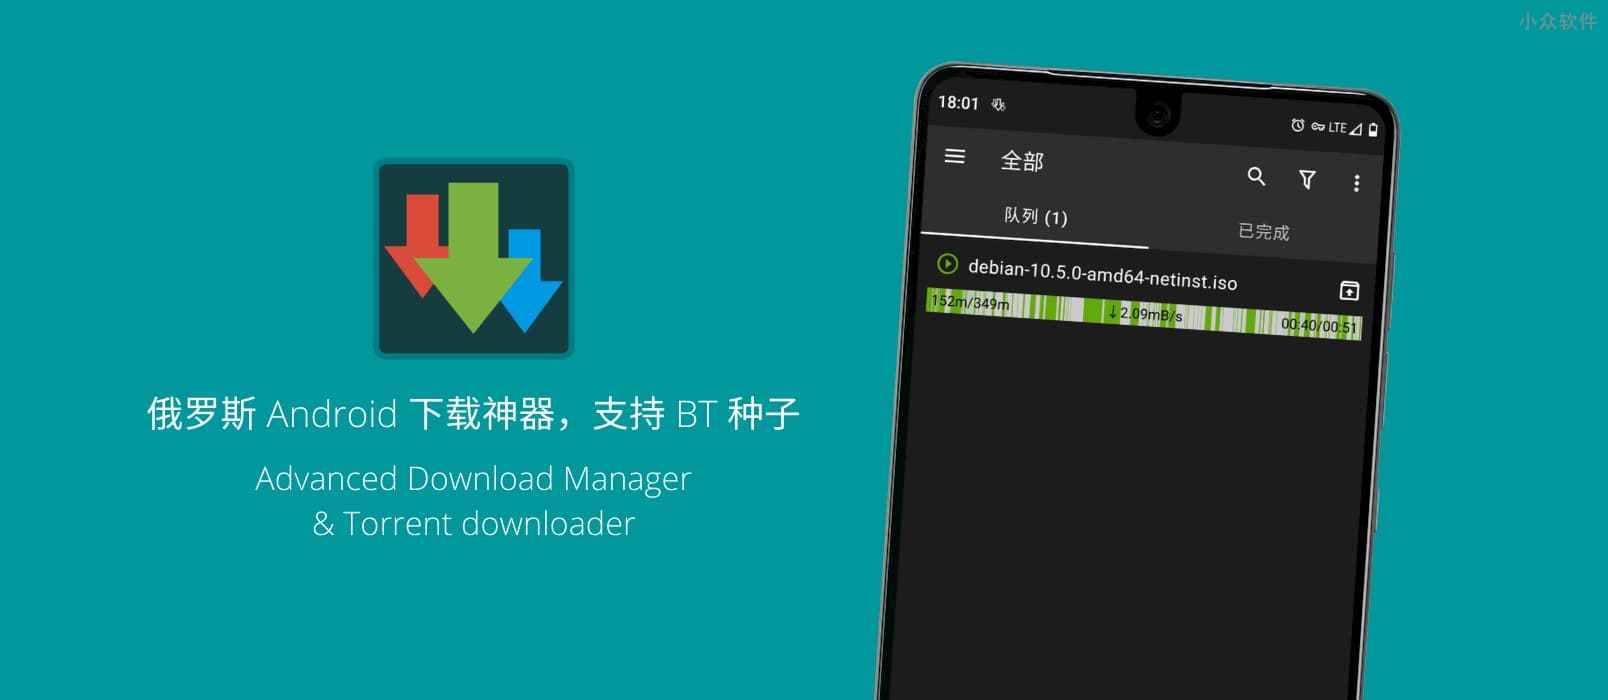 Advanced Download Manager(ADM) – 来自俄罗斯的 Android 下载神器，支持下载 BT 种子